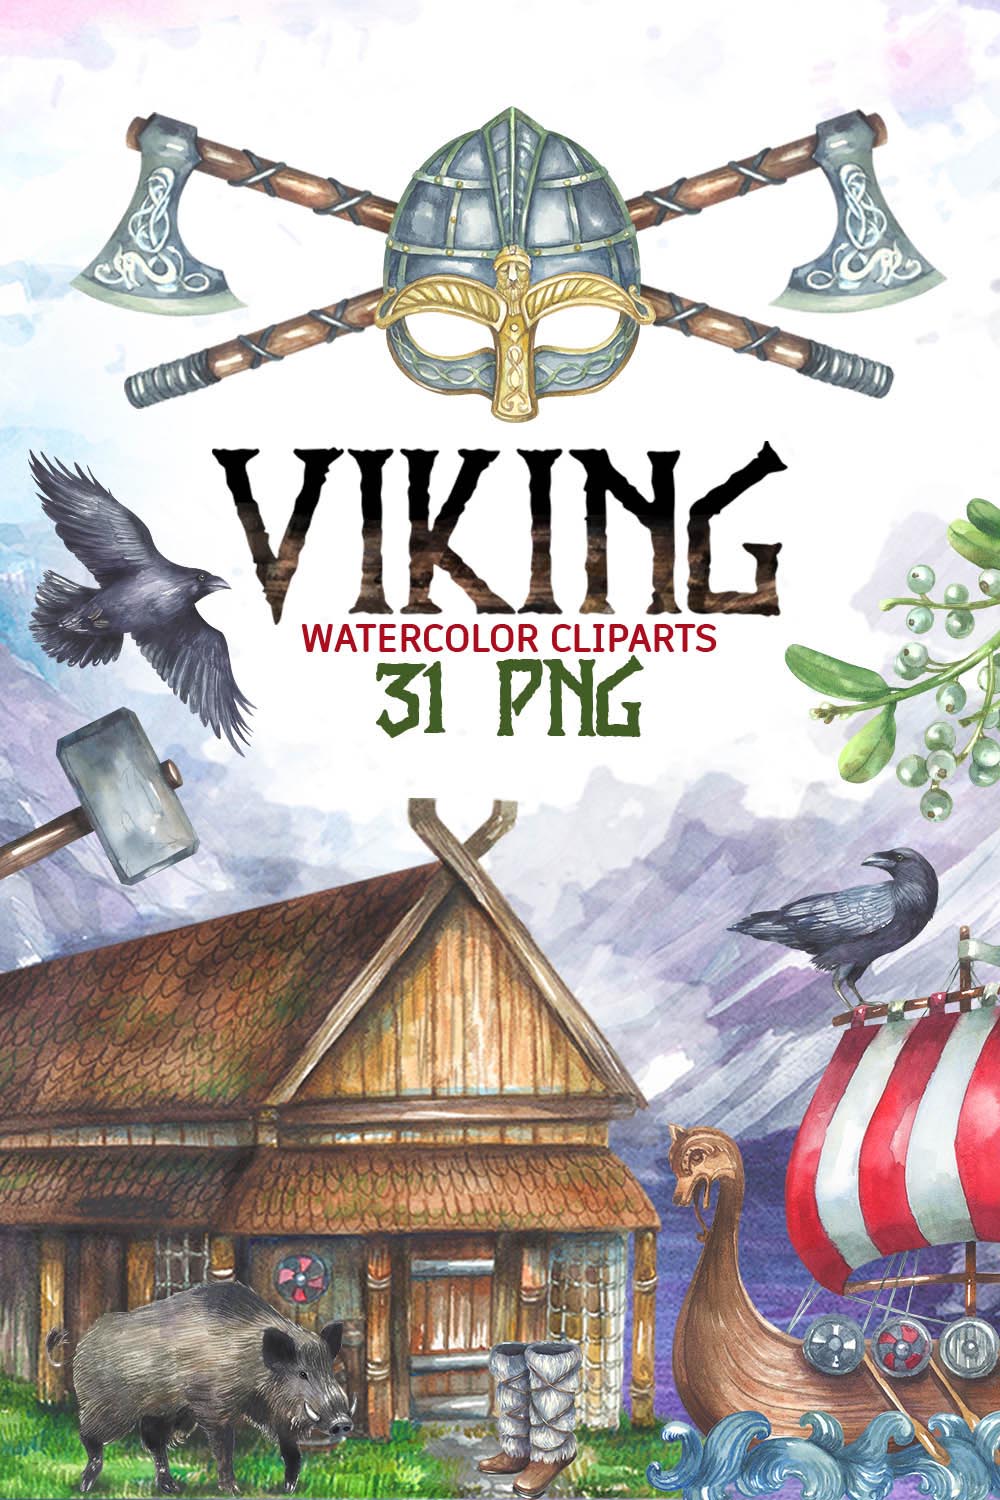 Viking Watercolor Cliparts Pinterest Image.